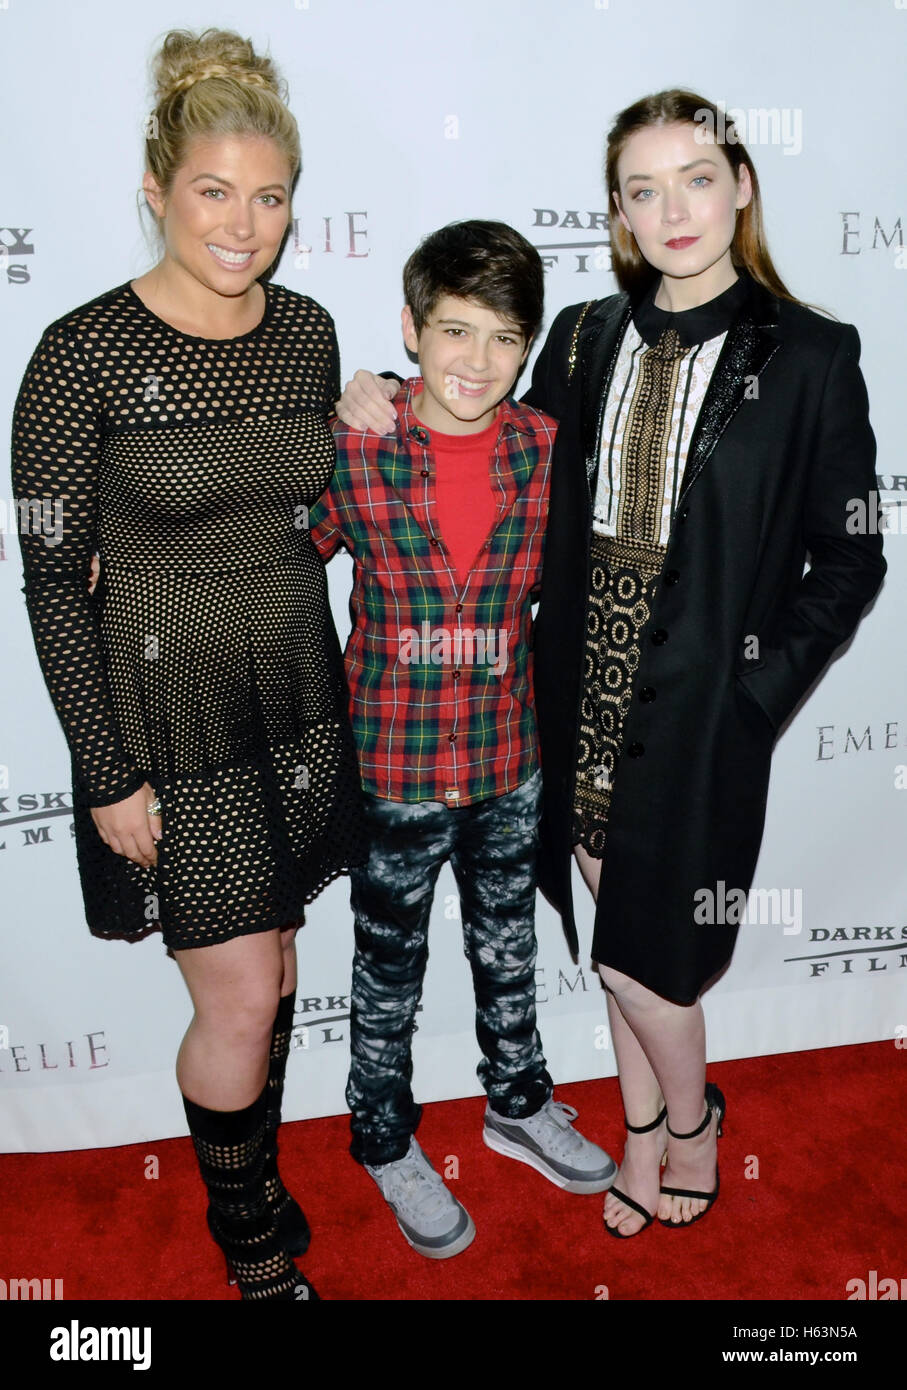 Elizabeth Jayne, Joshua Rush e Lizzie Friedman assiste la premiere di Dark Sky film' 'Emelie' a Arena Cinema Hollywood il 4 marzo 2016 in Hollywood, la California. Foto Stock